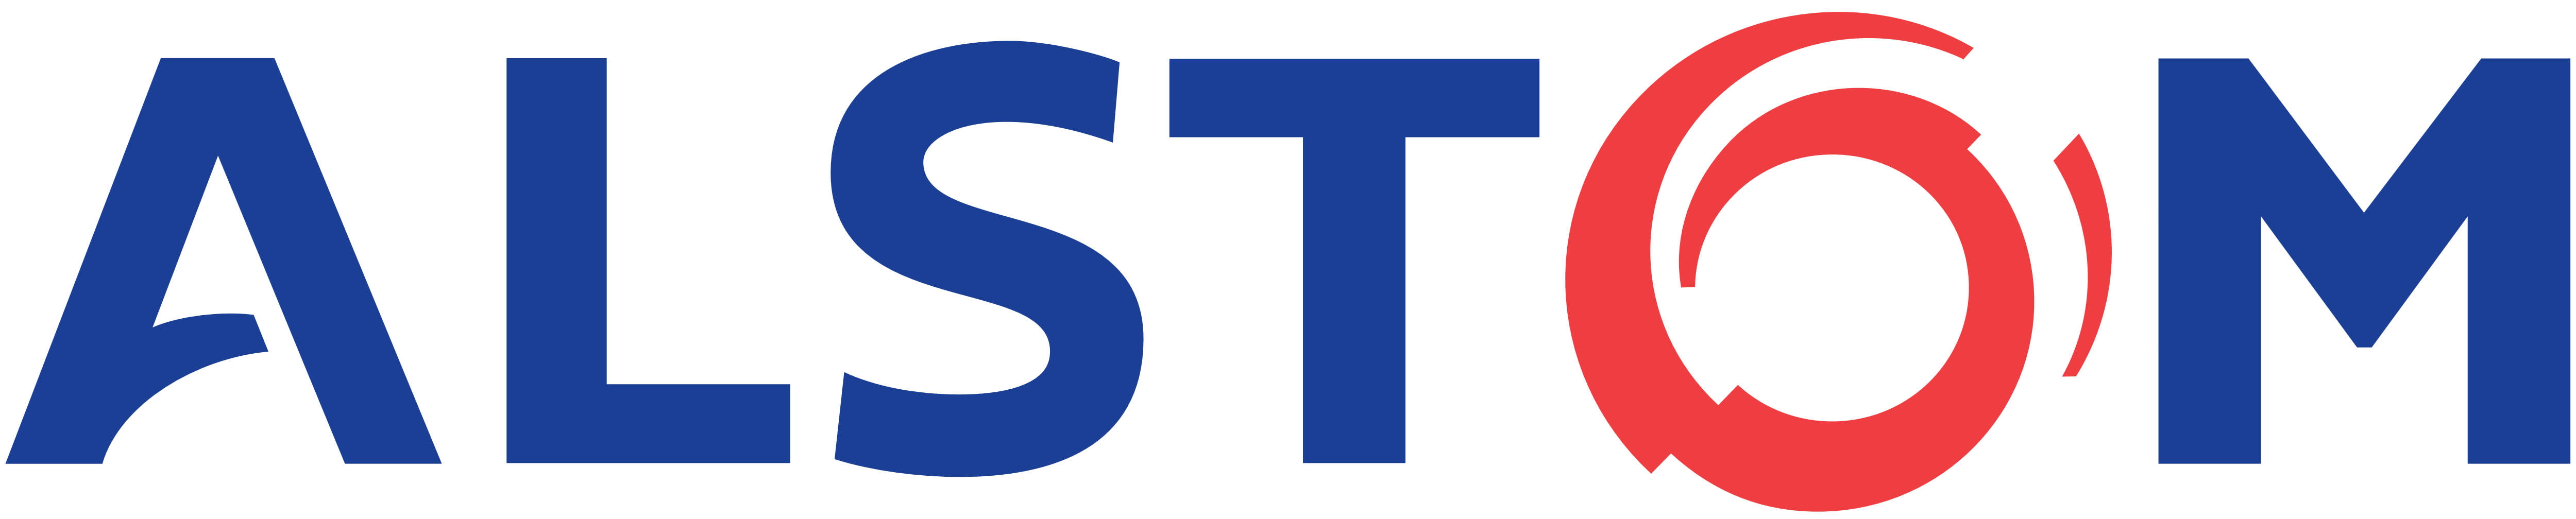 Alstom – Logos Download